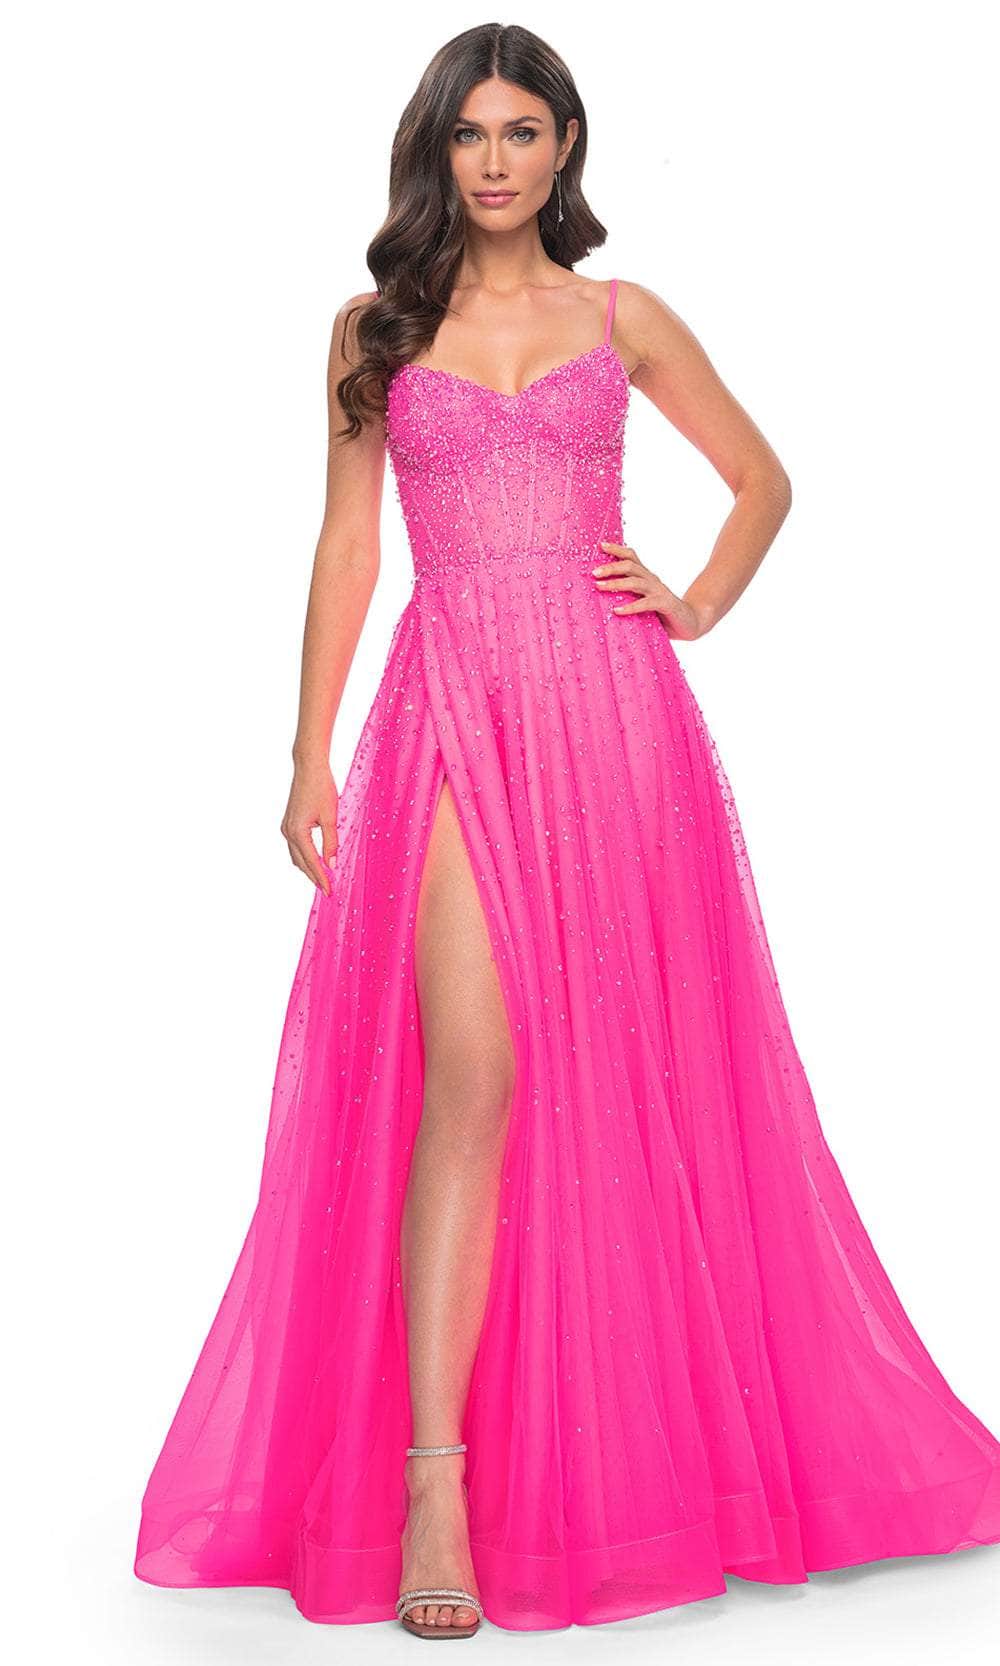 La Femme 32146 - Embellished Tulle Prom Dress Special Occasion Dress 00 / Neon Pink